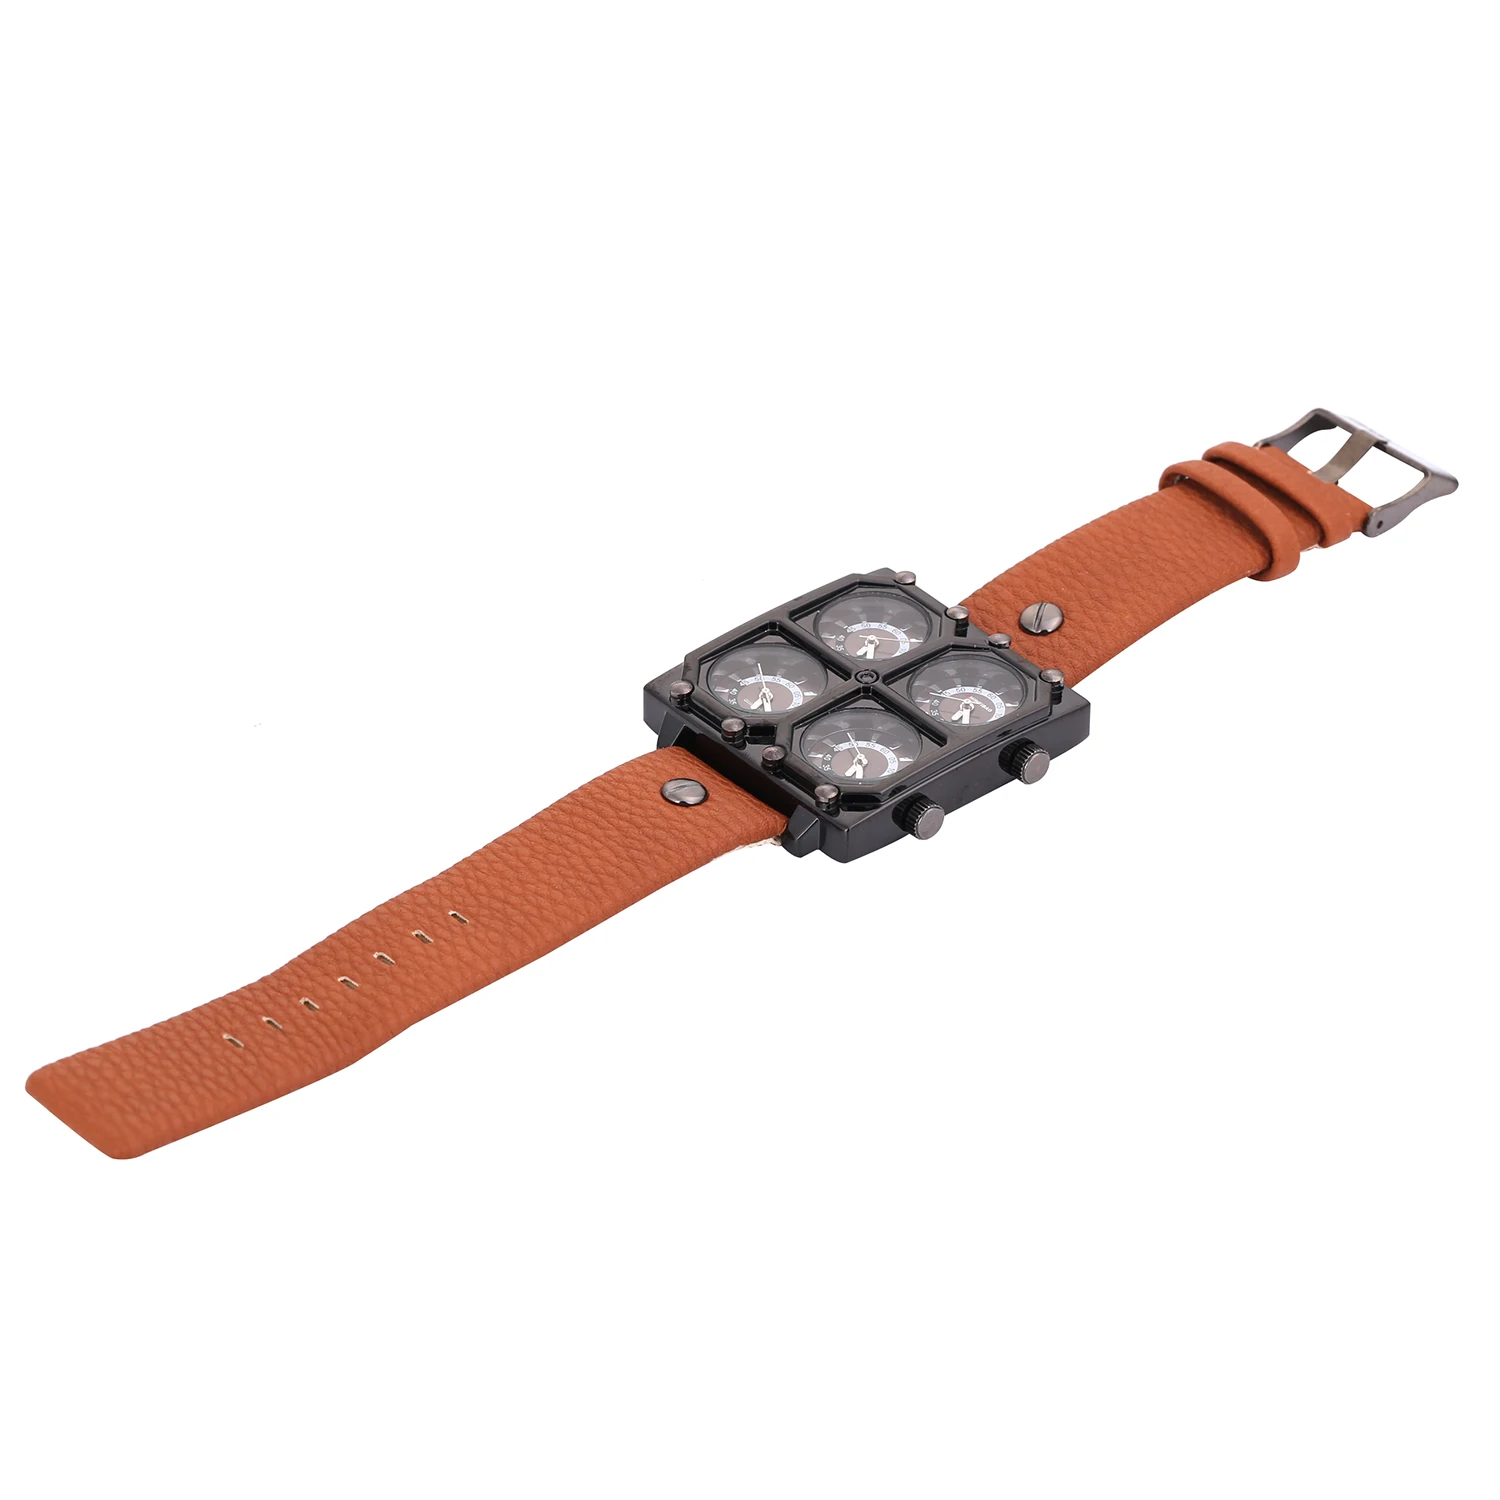 

Shiweibao Quartz Watches Men Watch Luxury Brand Four Time Zones Military Wristwatches Camouflage Strap Sports Relogio Feme Wrist